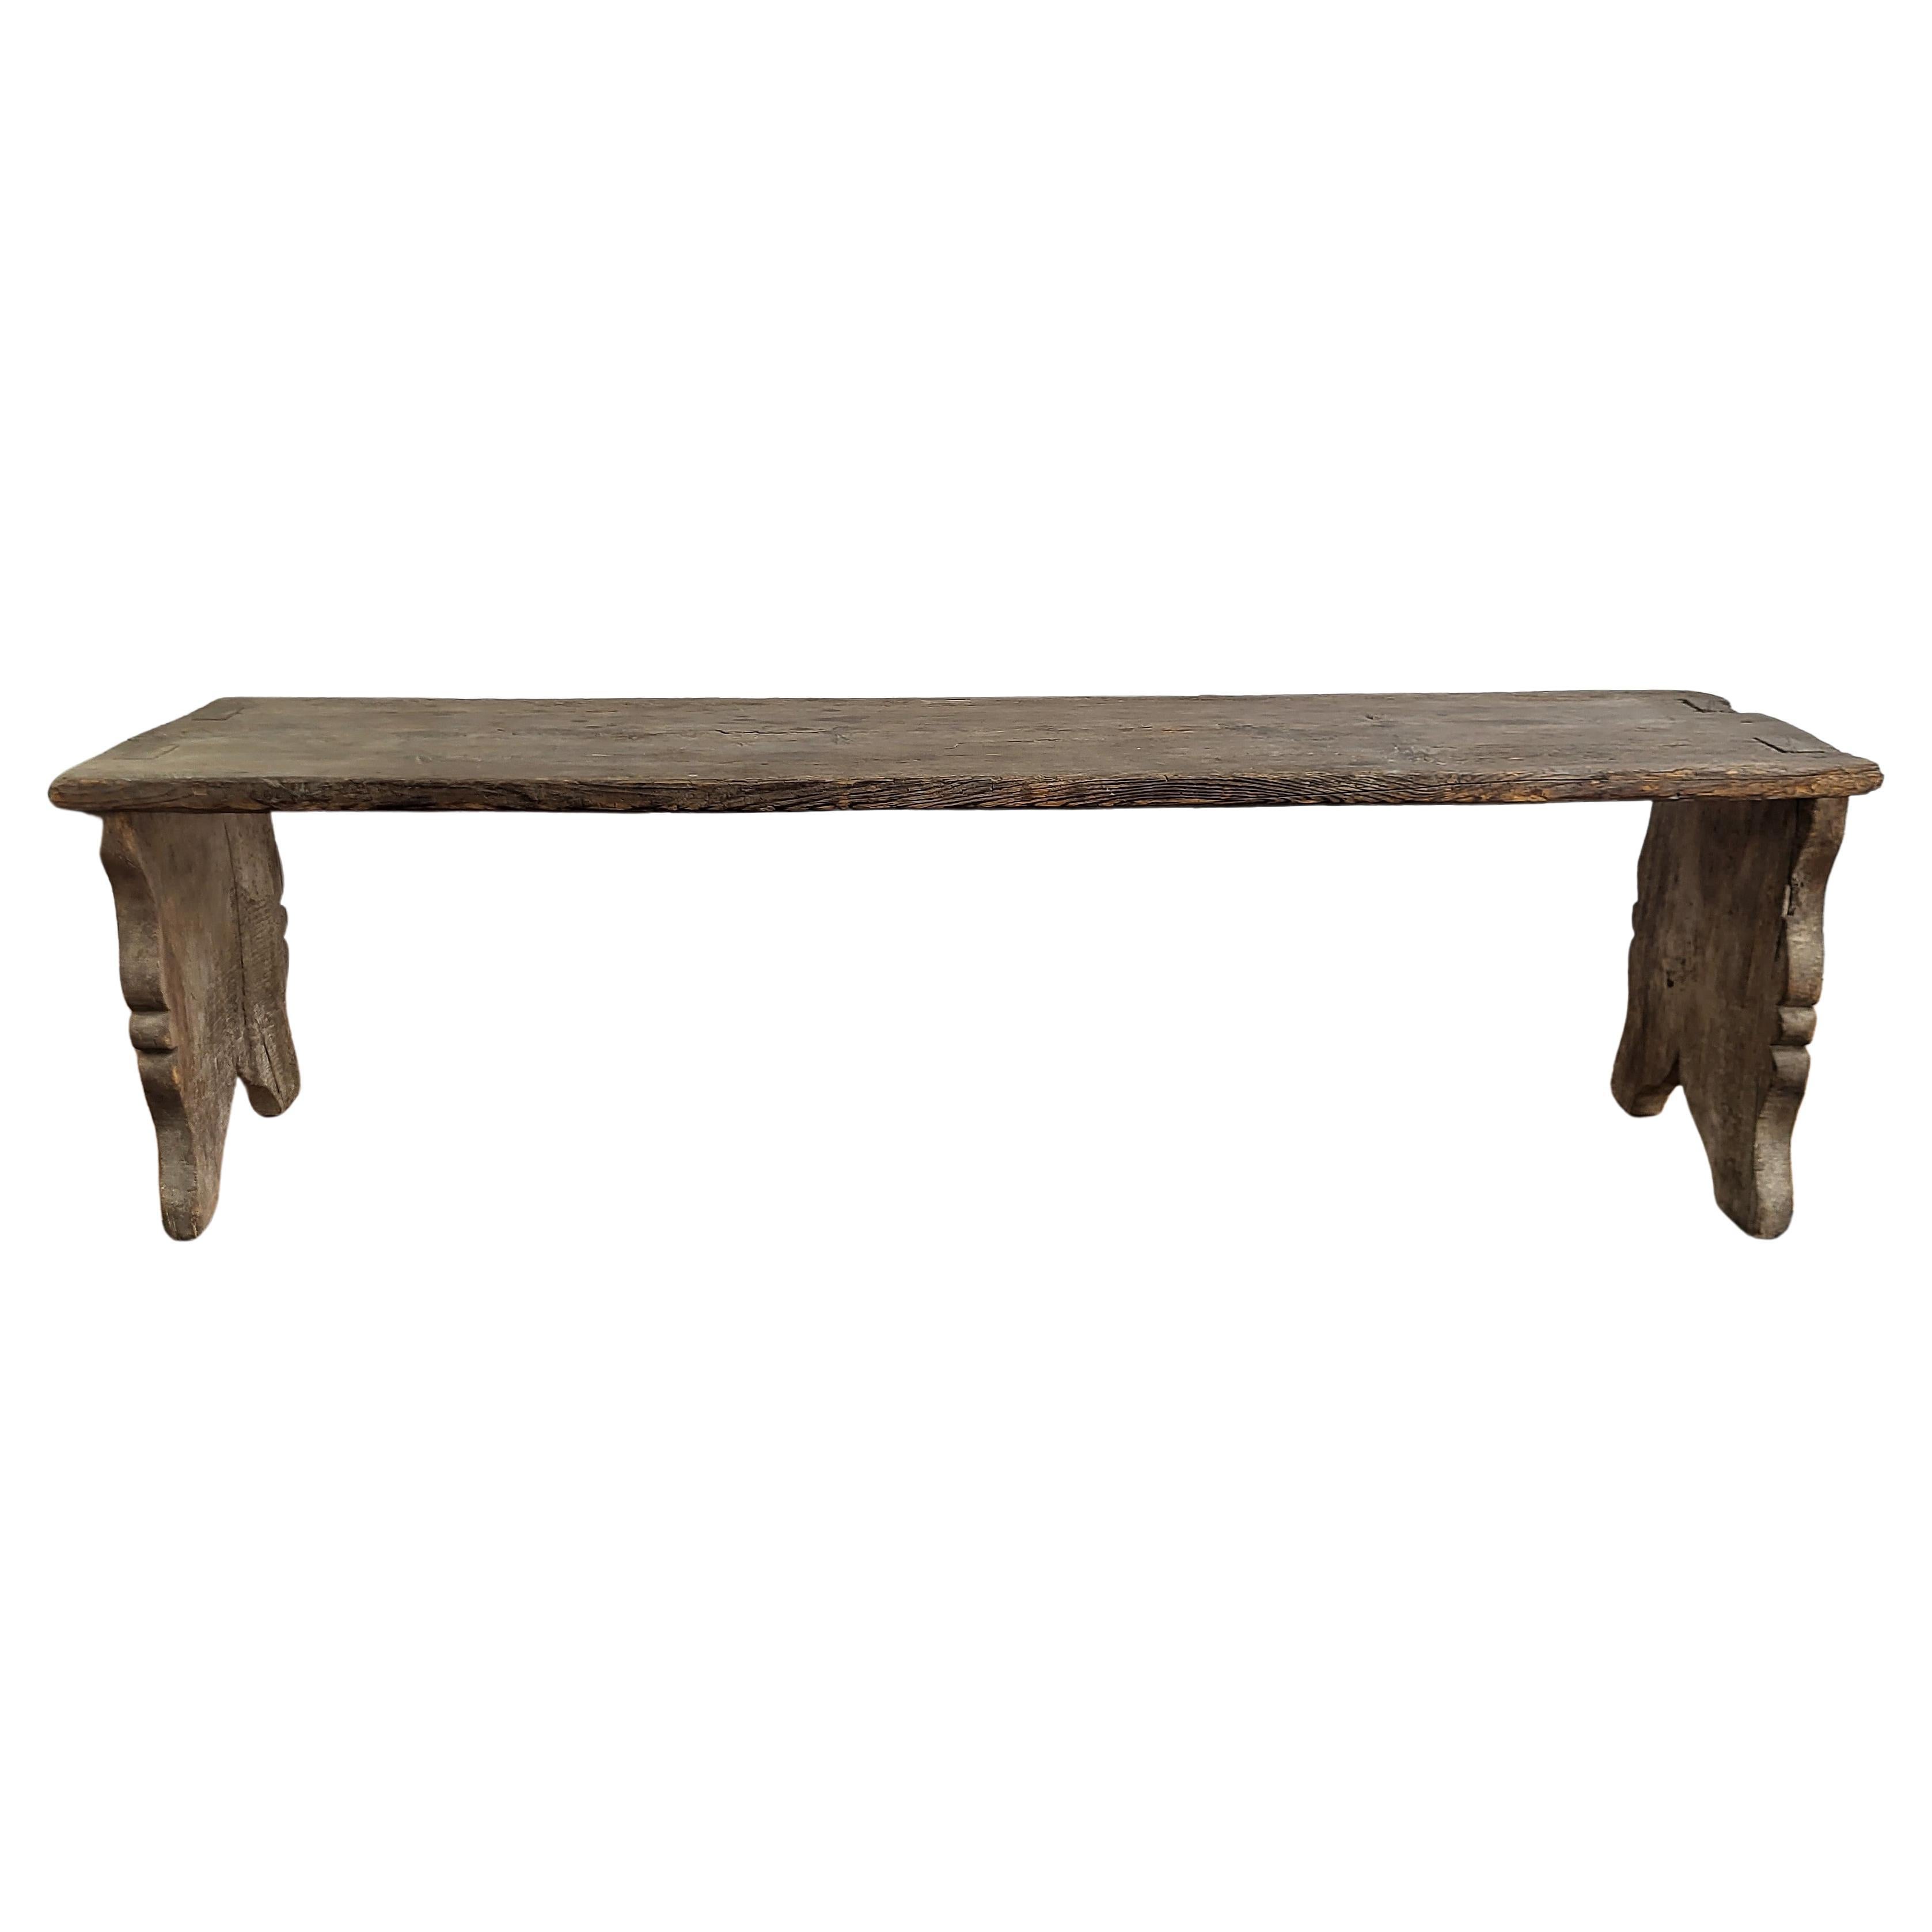 Primitive Rustic Minimal Italian Midcentury Wooden Bench Side Table